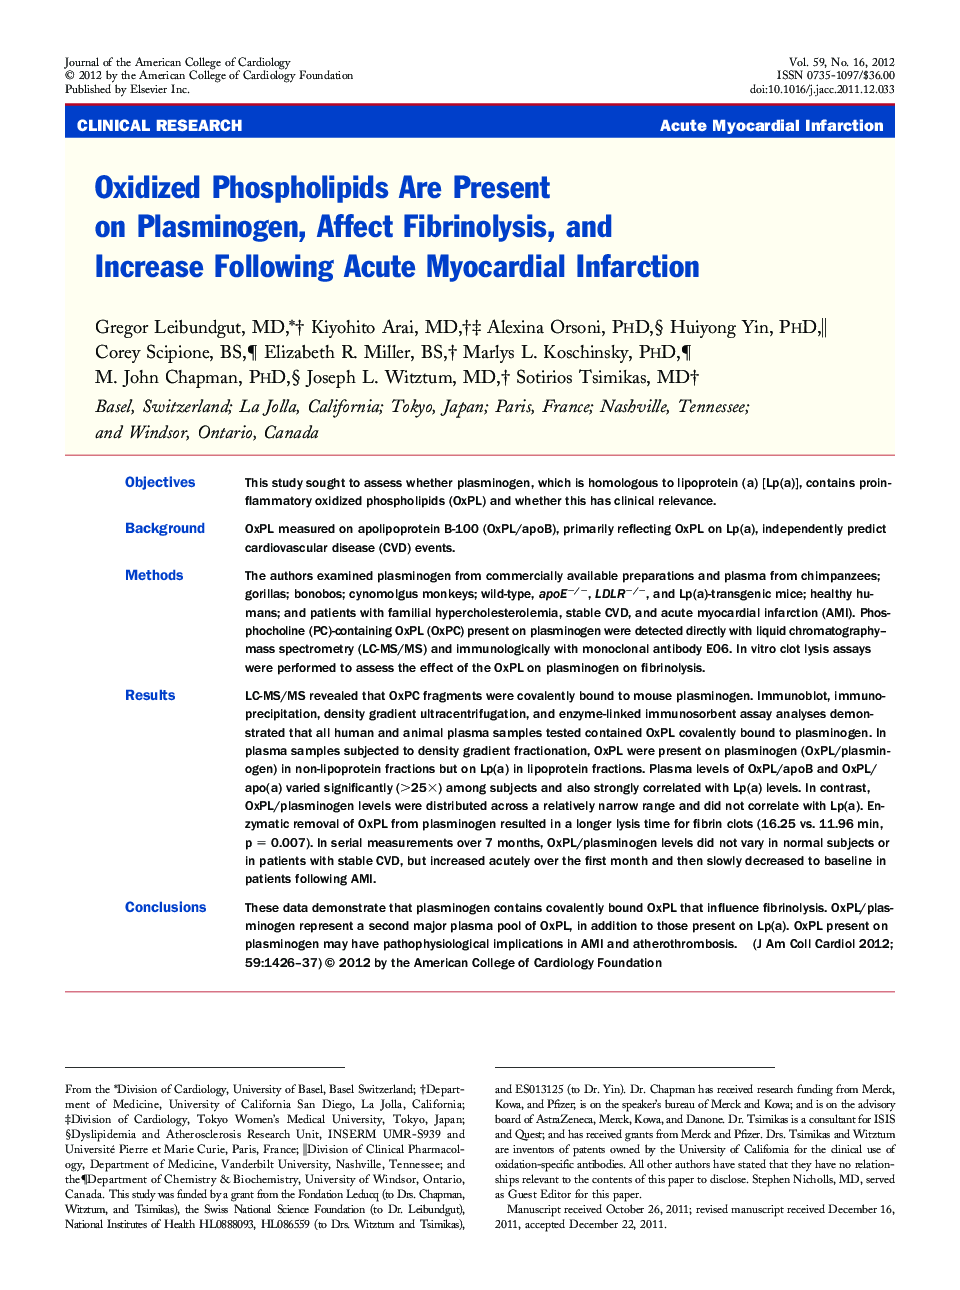 Oxidized Phospholipids Are Present on Plasminogen, Affect Fibrinolysis, and Increase Following Acute Myocardial Infarction 